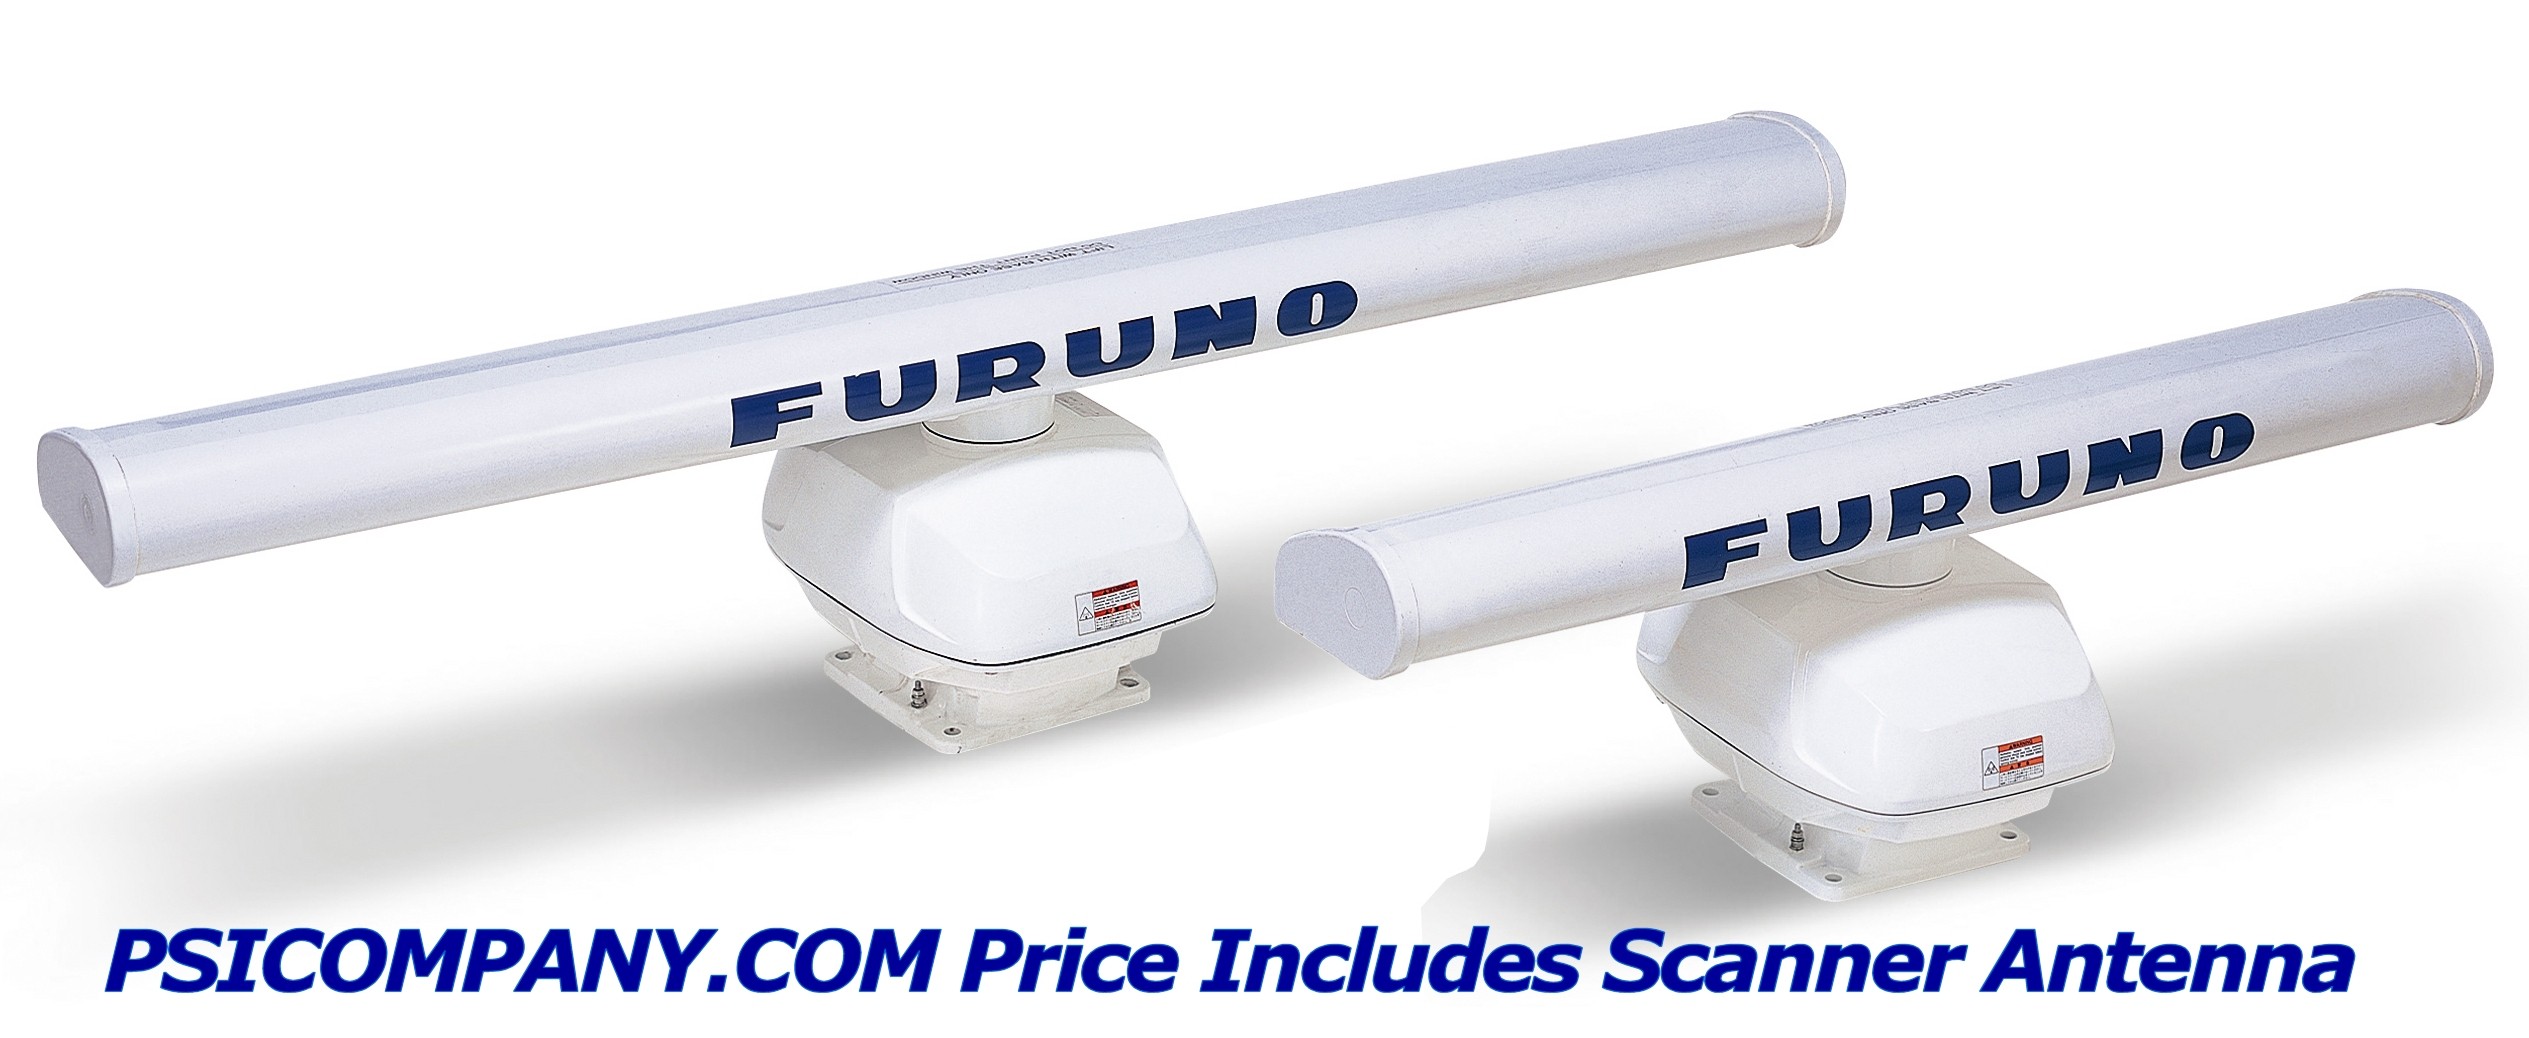 Furuno DRS25A Price RADAR Sensor with 6' Antenna, For Furuno Navnet 3D